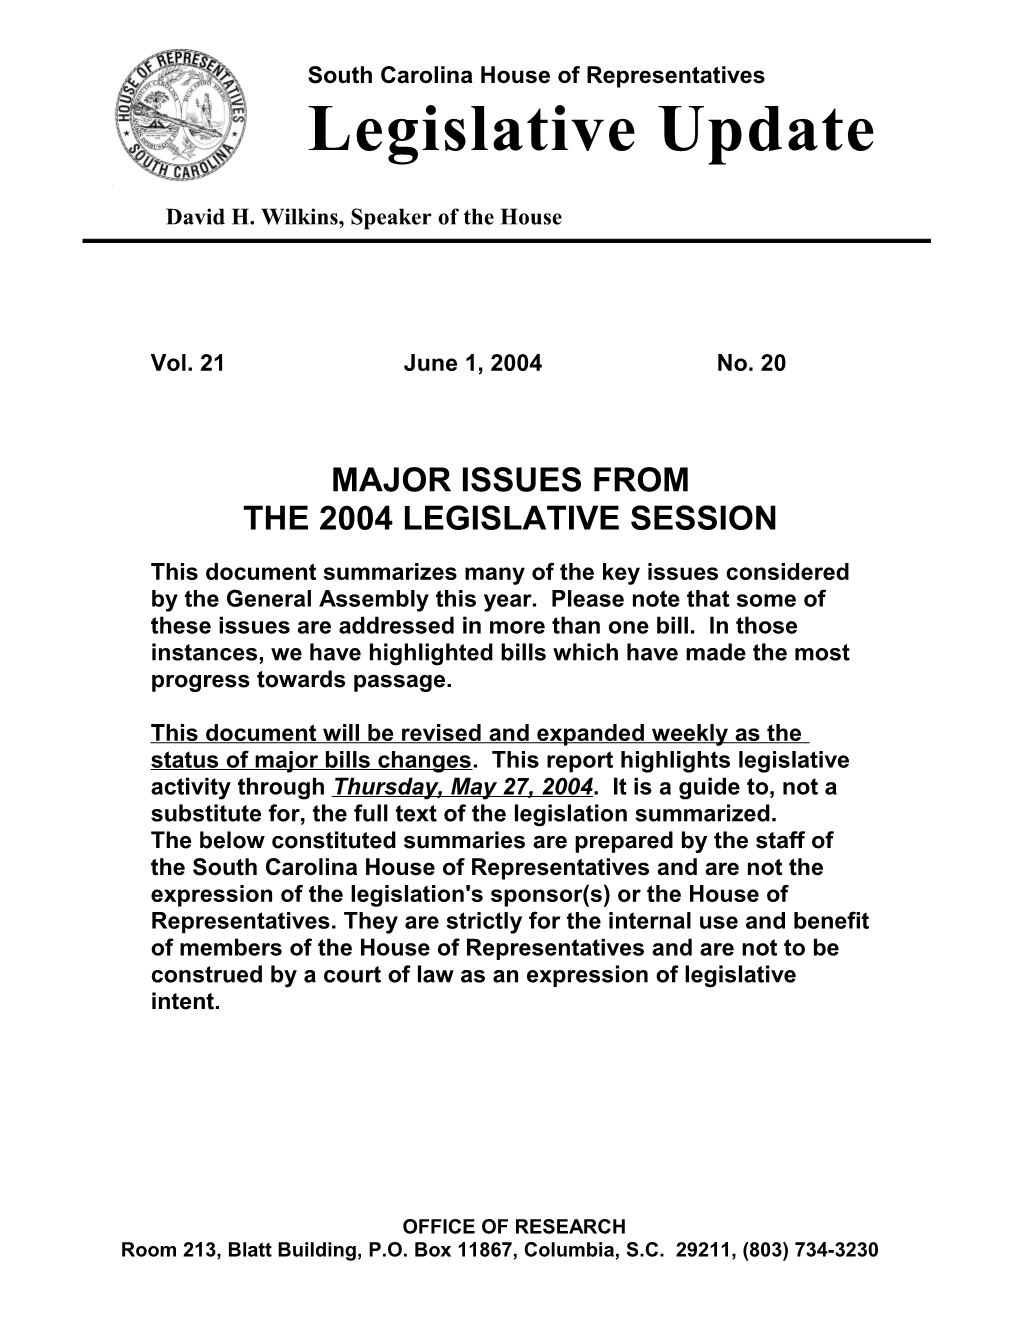 Legislative Update - Vol. 21 No. 20 June 1, 2004 - South Carolina Legislature Online